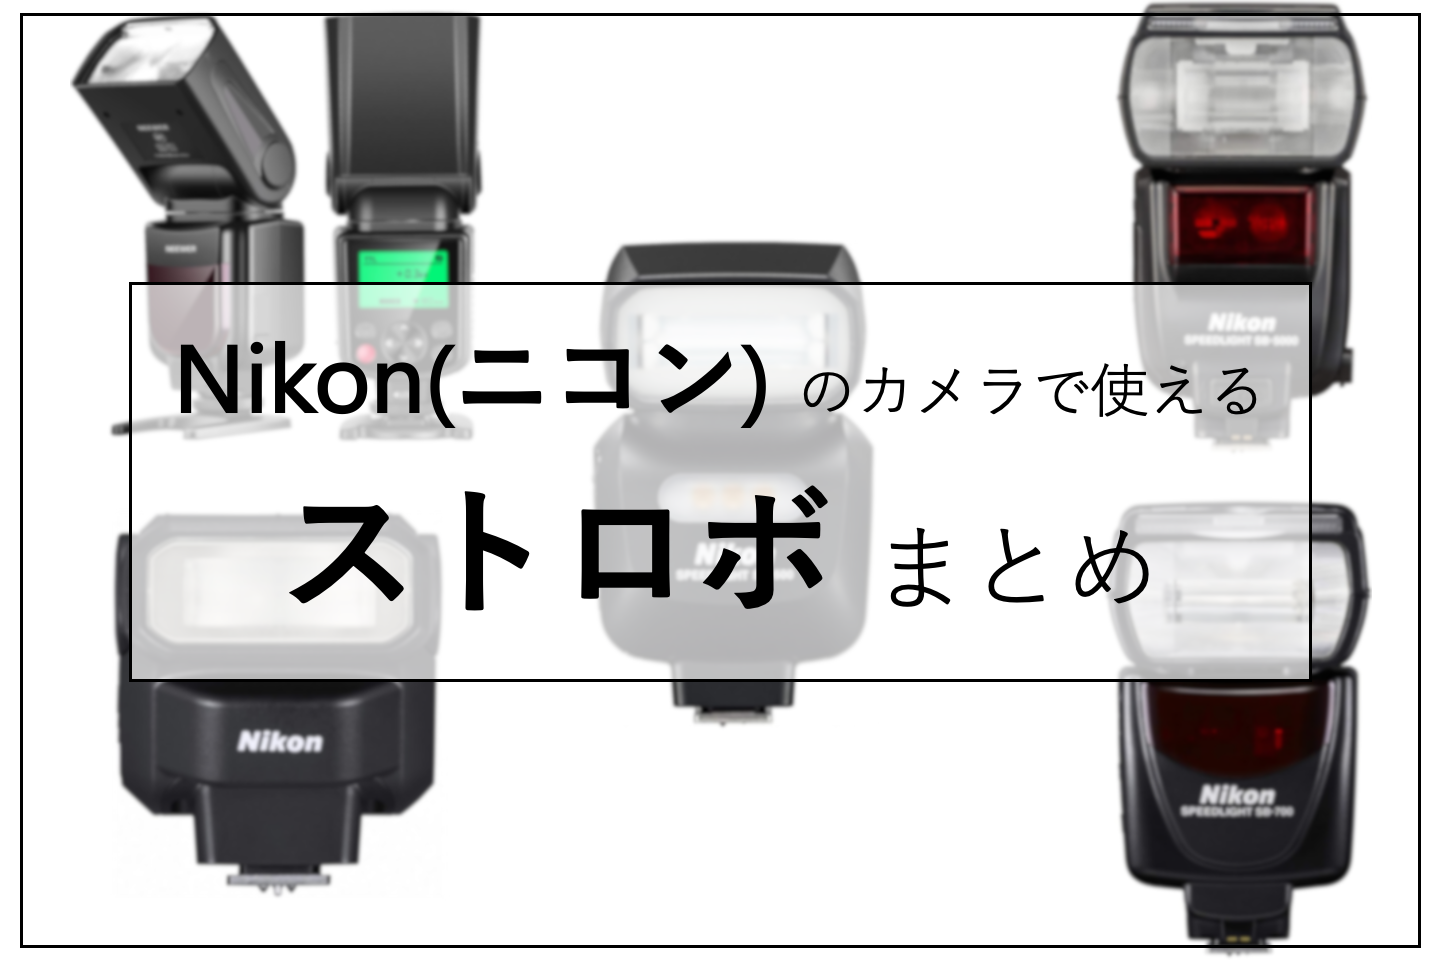 Nikon スピードライト-